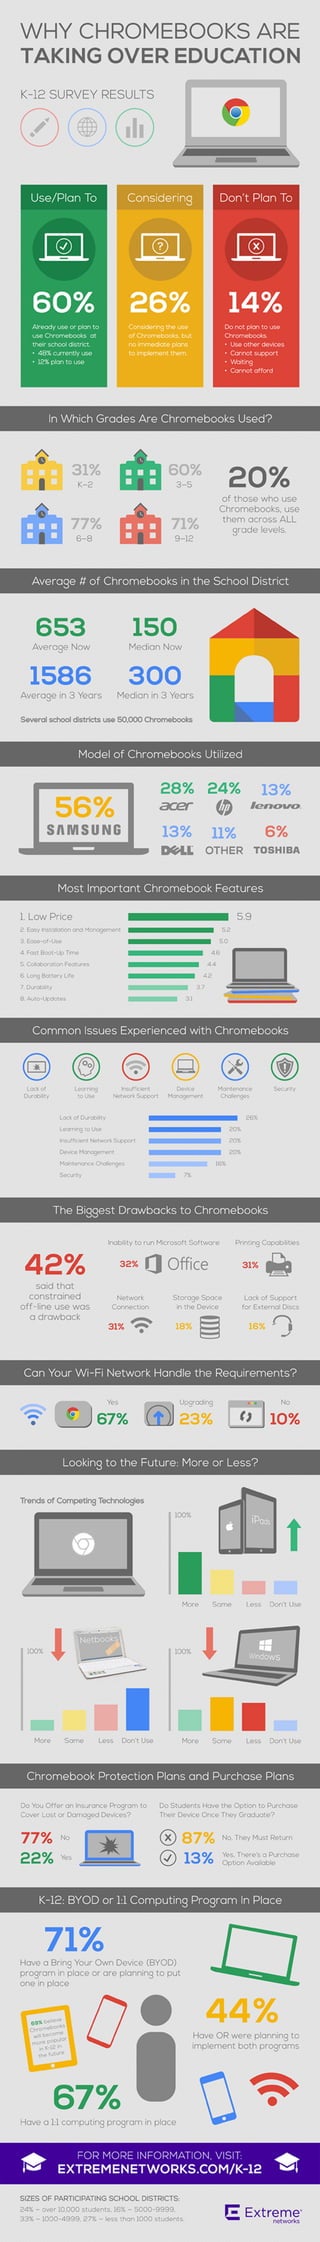 Chromebooks in K-12 Education Survey Results